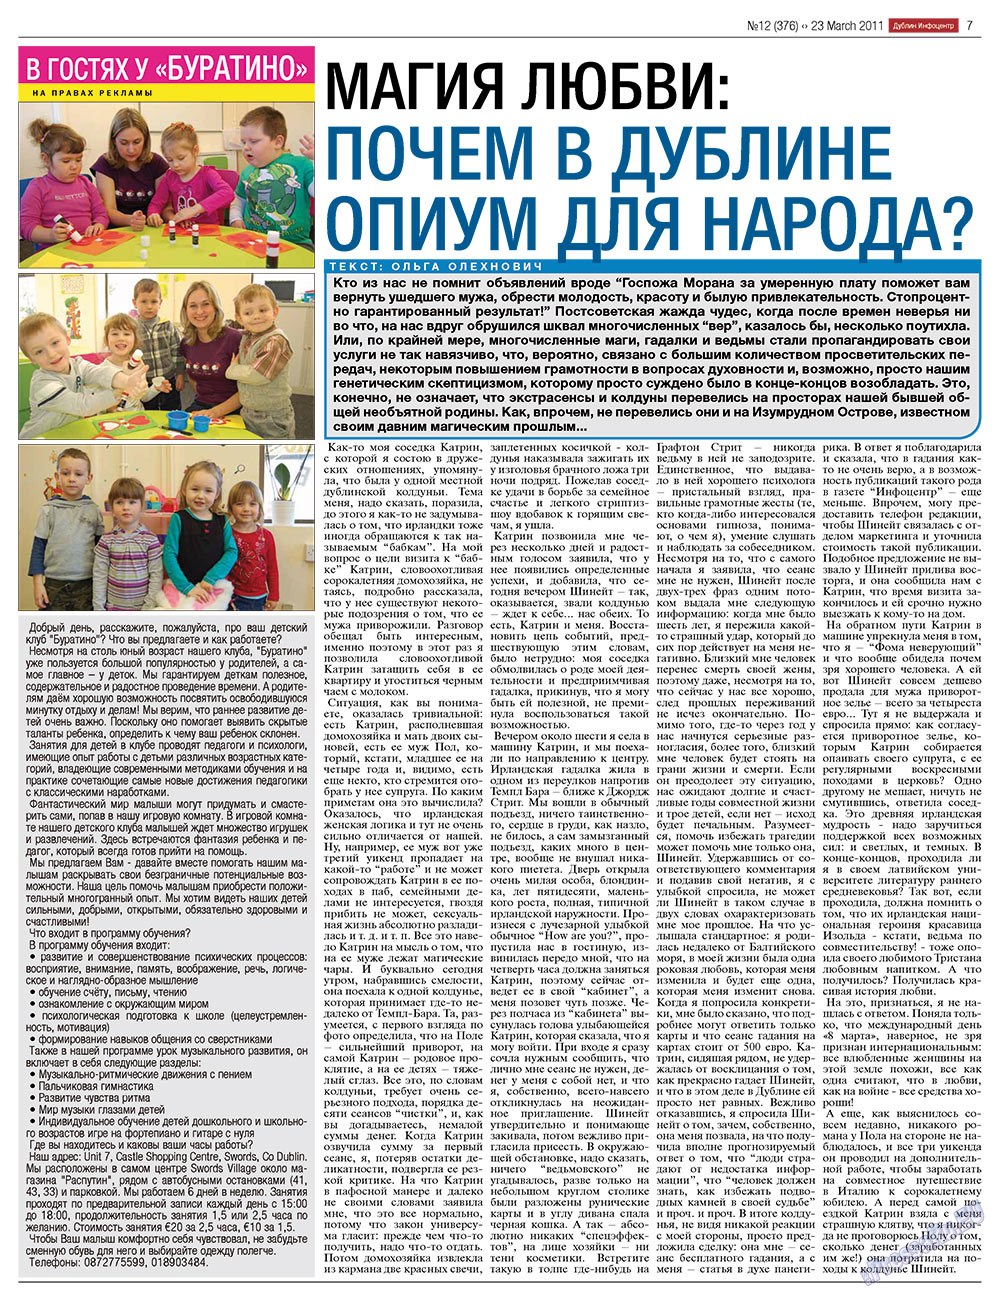 Дублин инфоцентр, газета. 2011 №12 стр.7